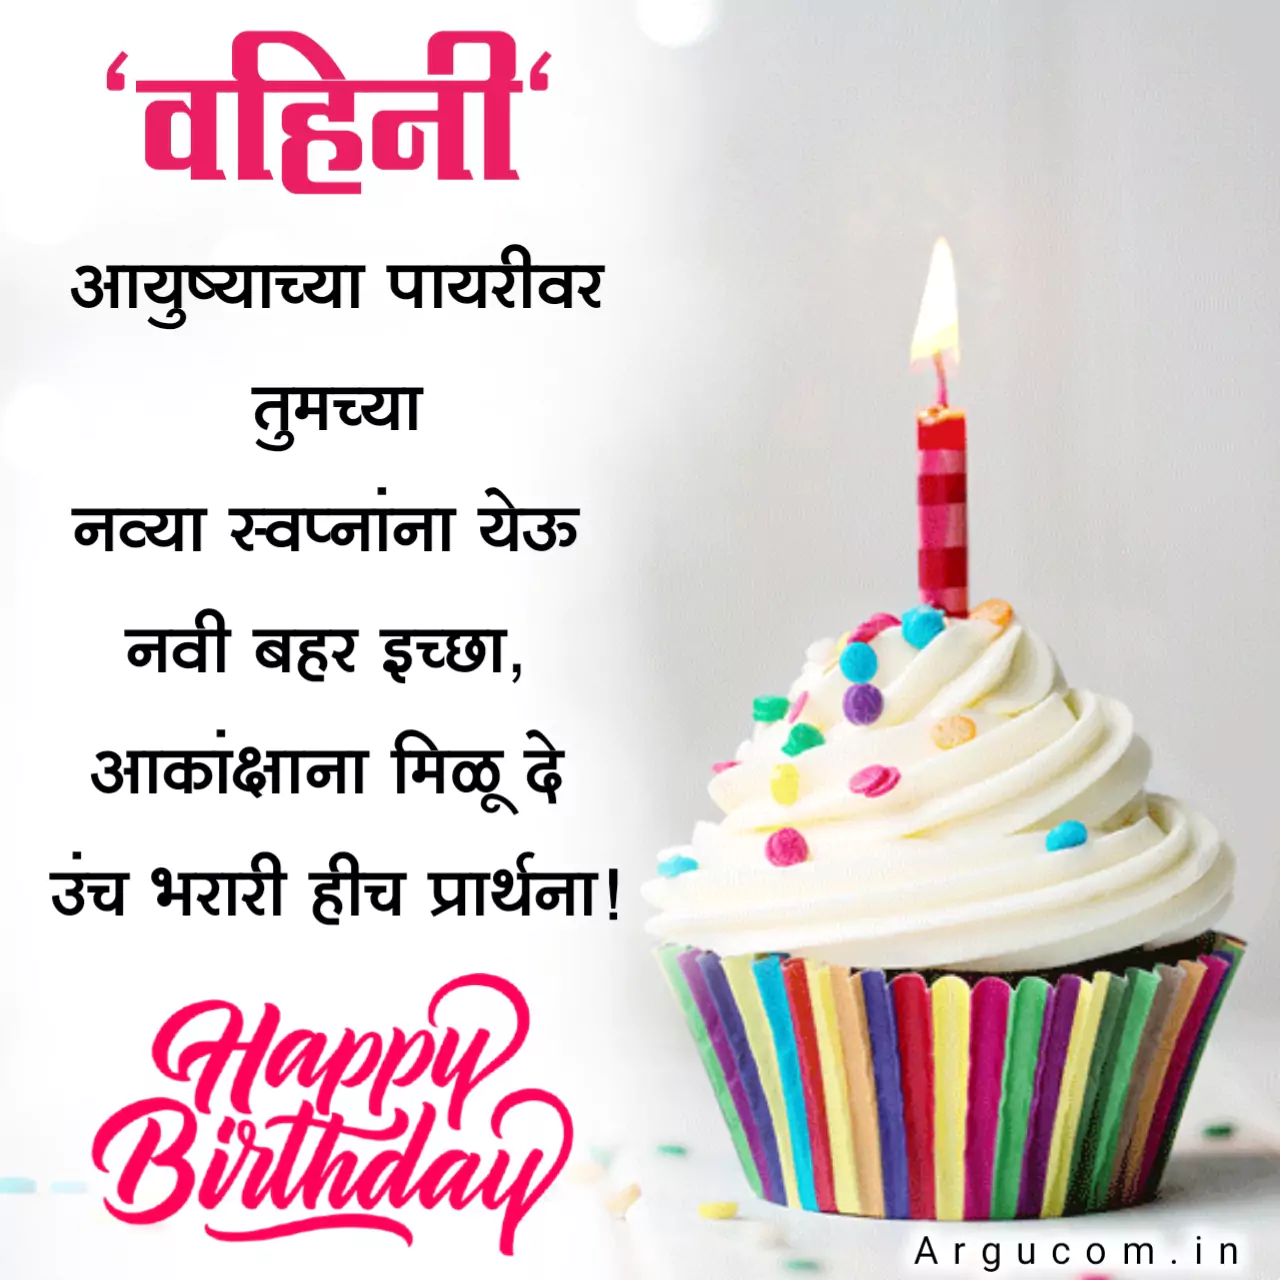 Happy Birthday Status for vahini in marathi